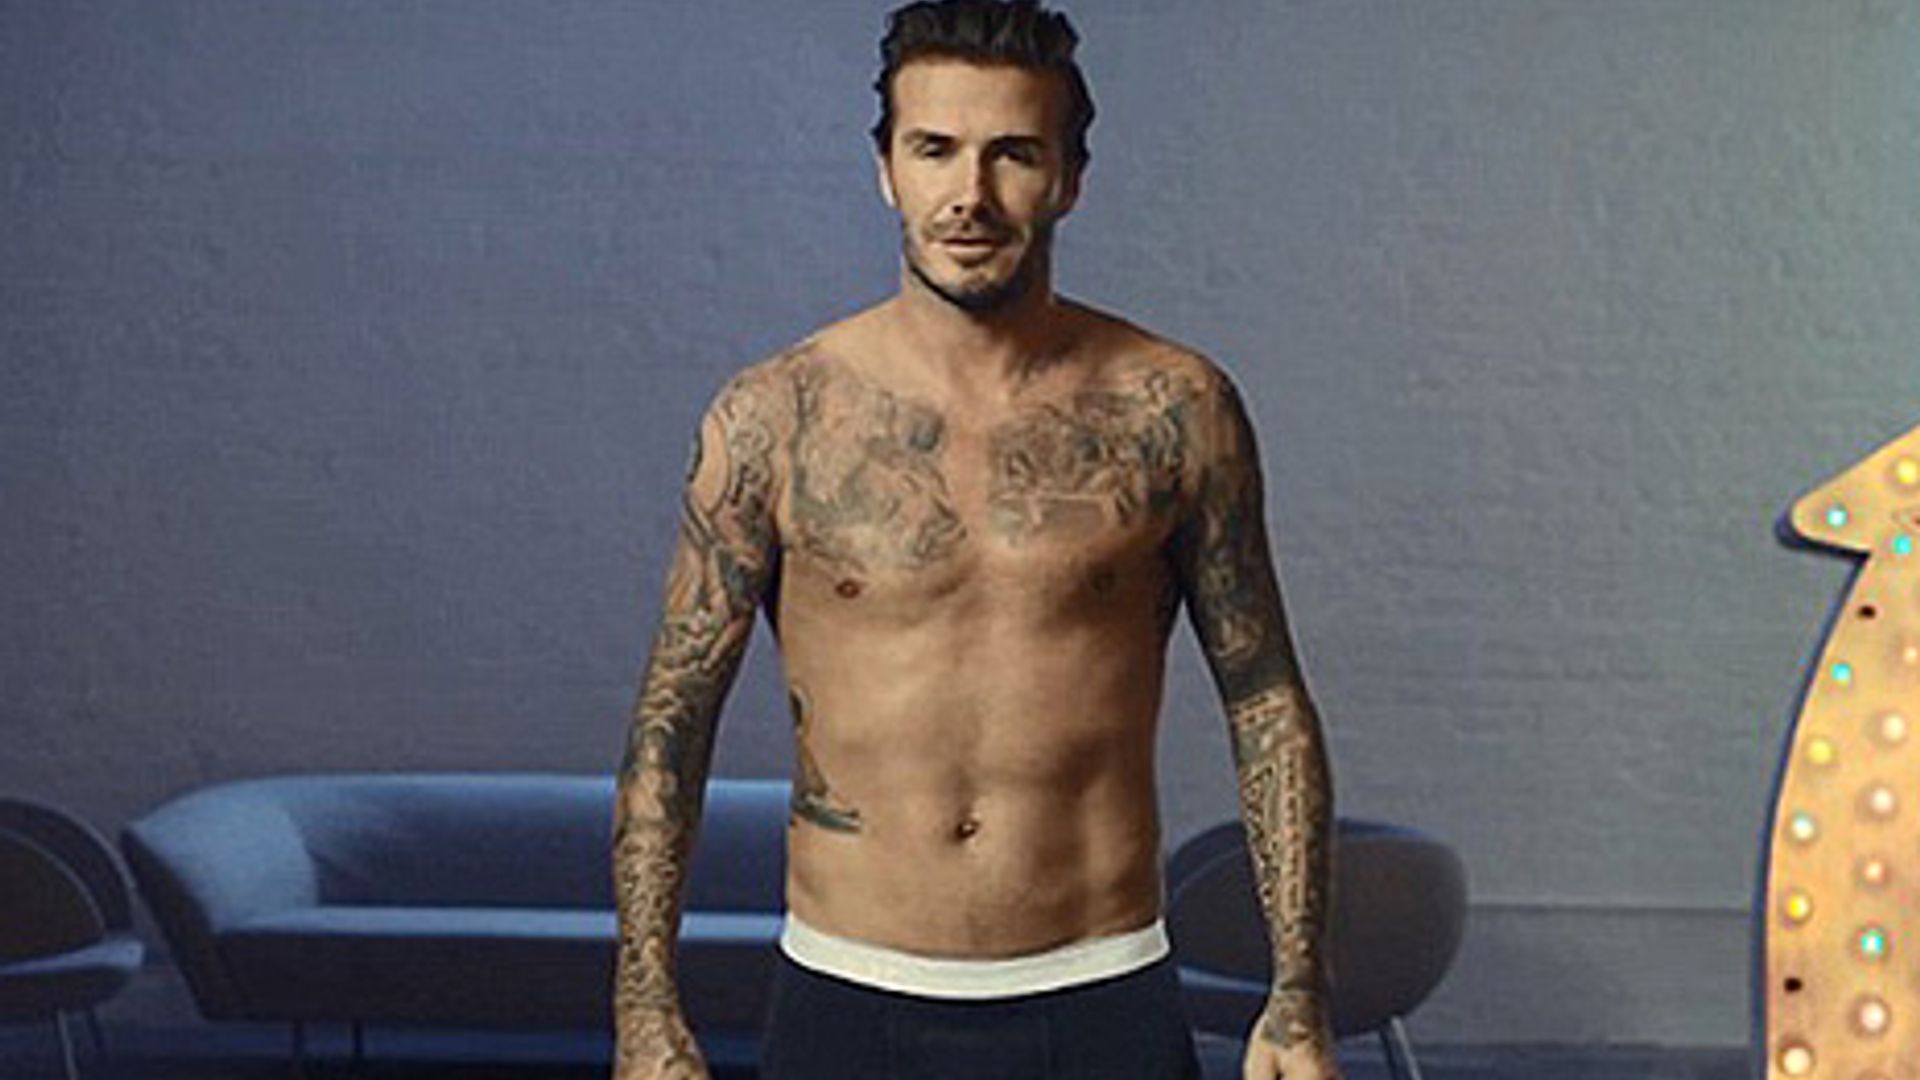 David Beckham strips down for Super Bowl ad